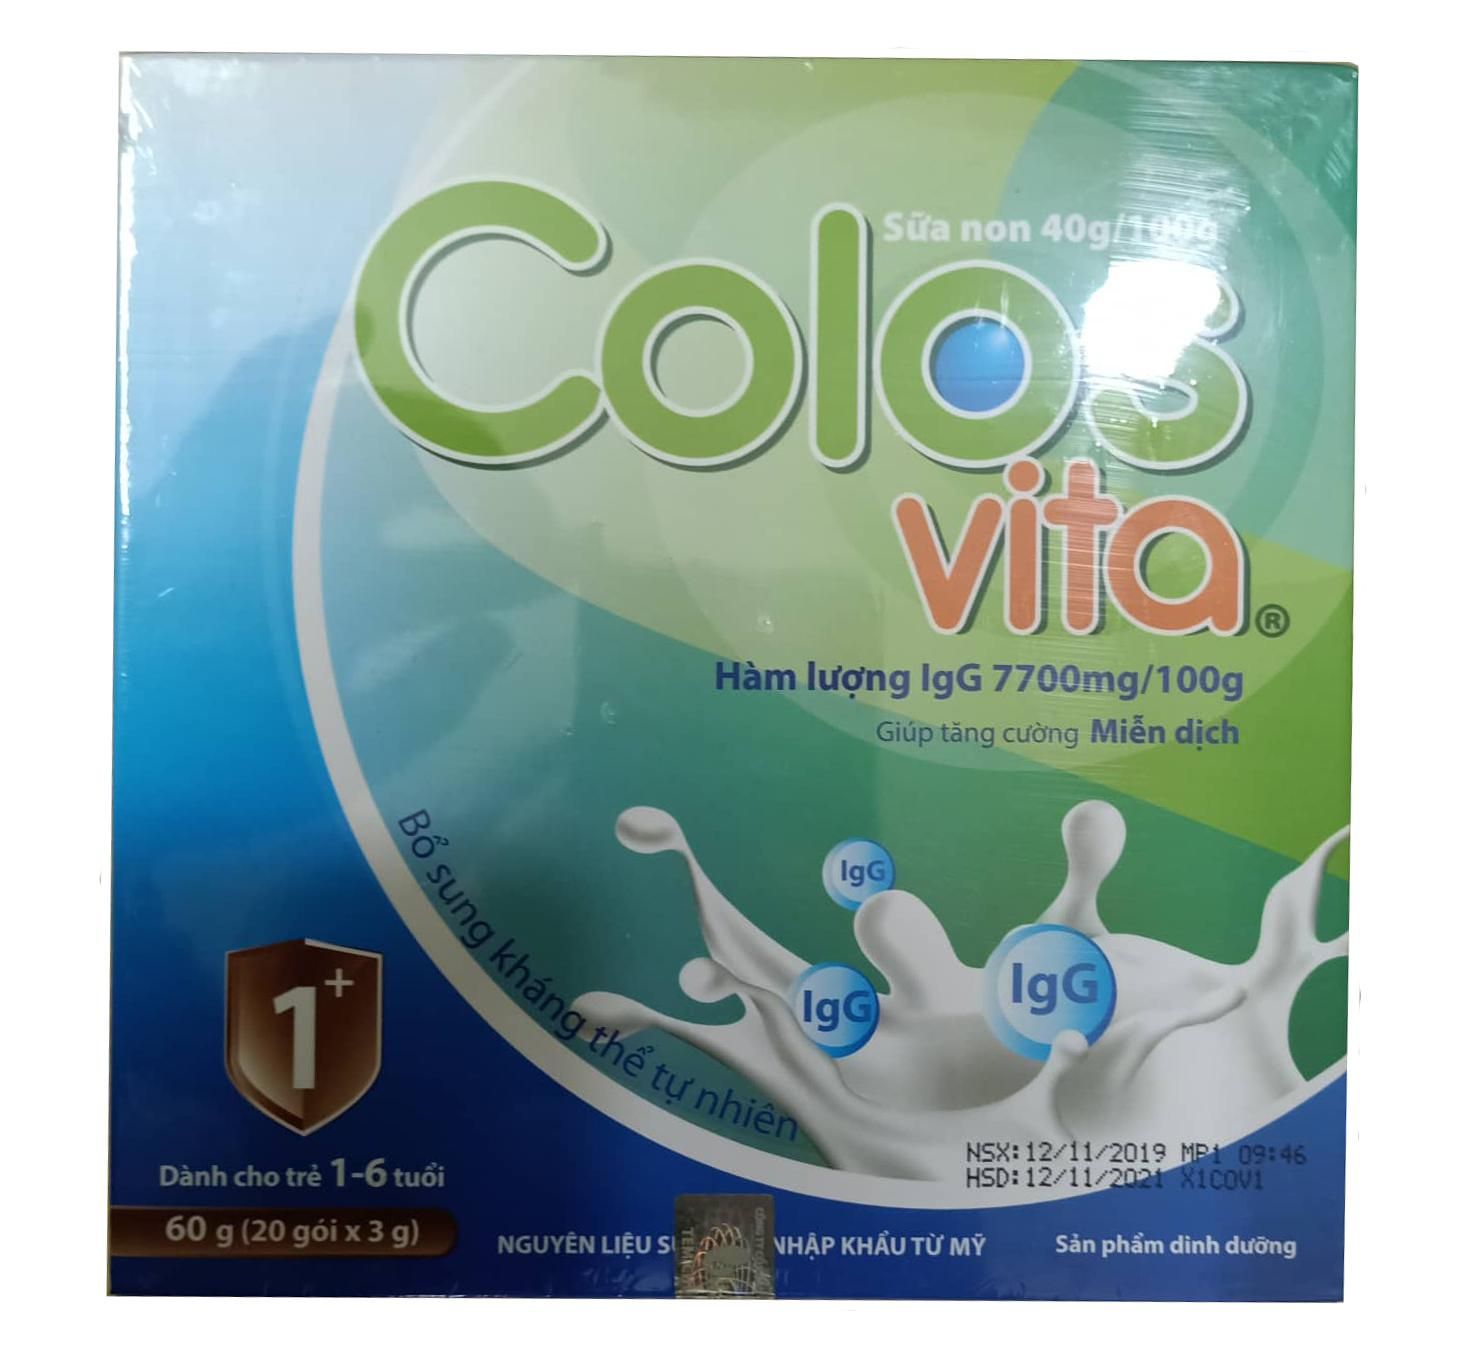 Sữa non Colosvita cho trẻ từ 1 - 6 tuổi mẫu mới